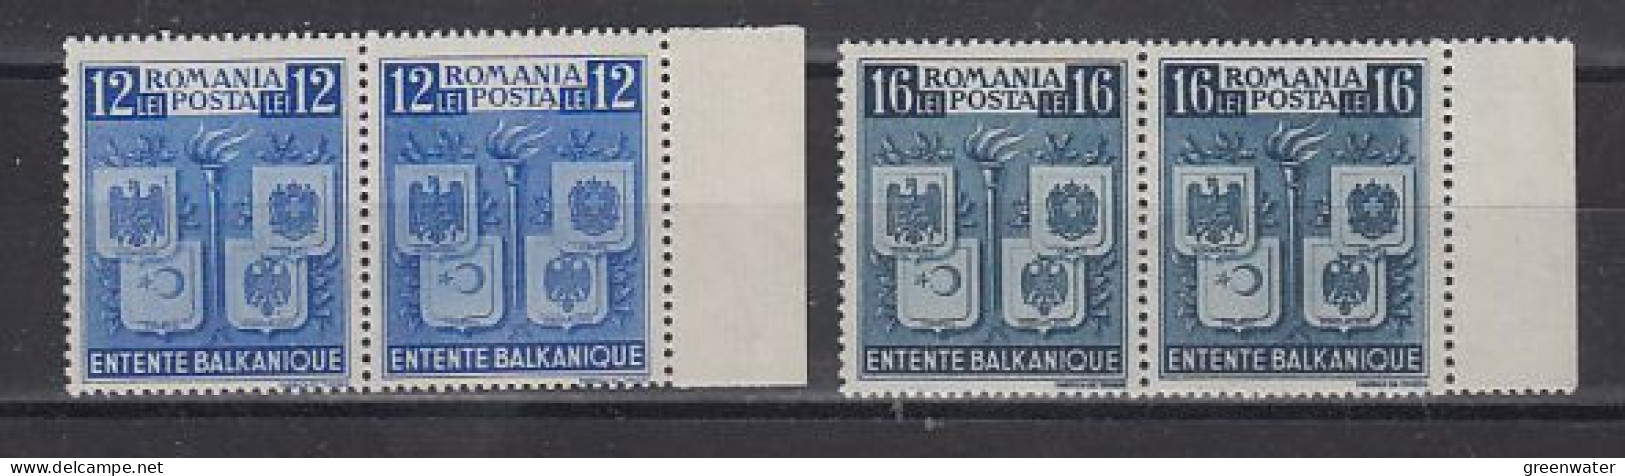 Romania 1940 Petite Entente 2v (pair) ** Mnh (59753) - European Ideas